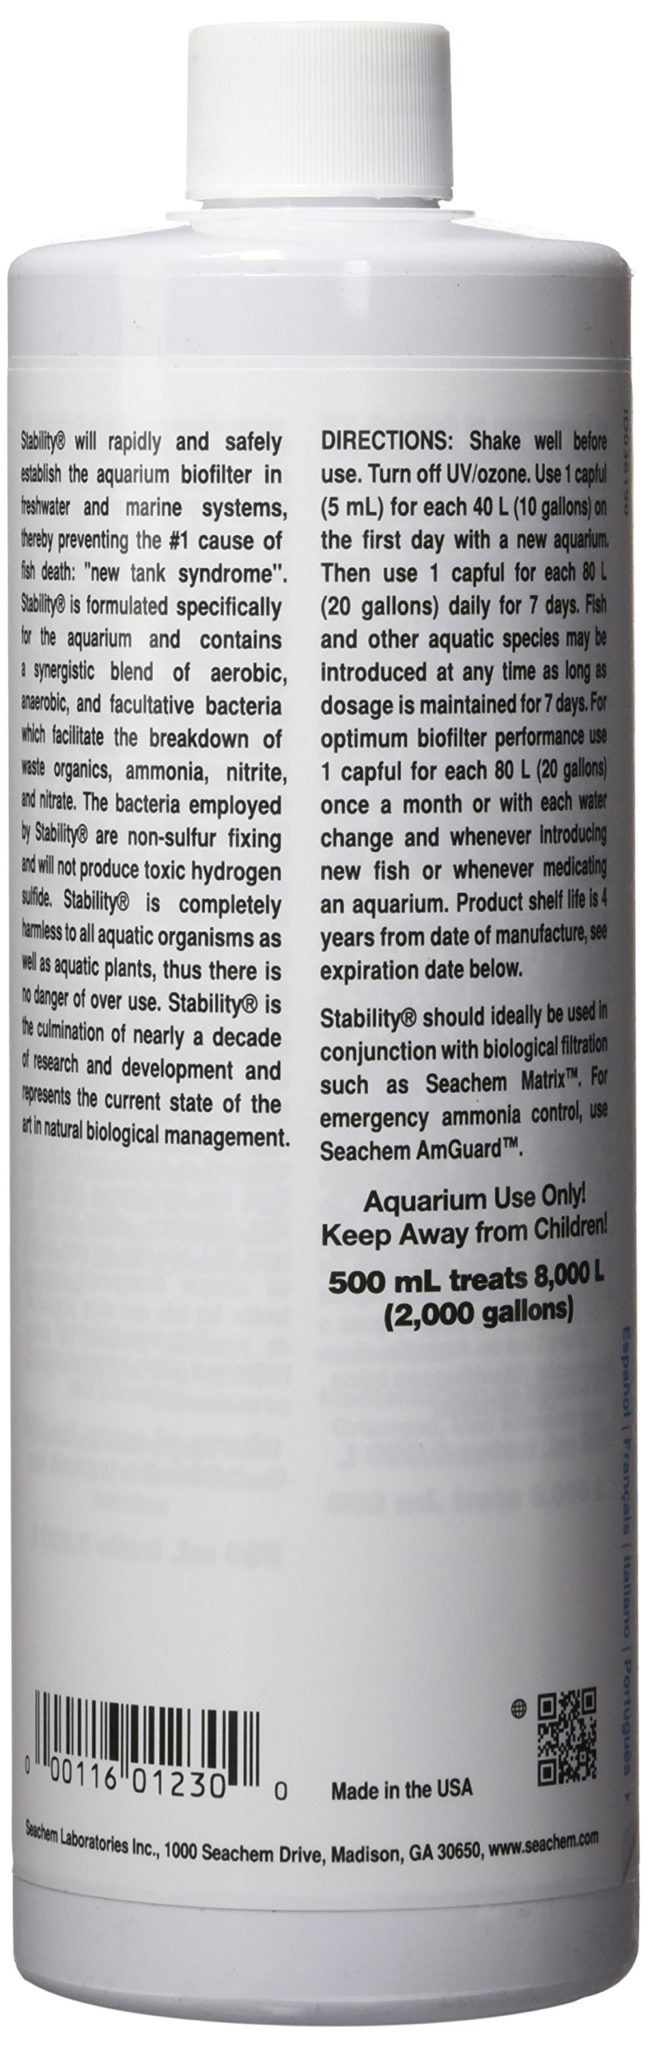 Seachem Stability 500ml - $19.95